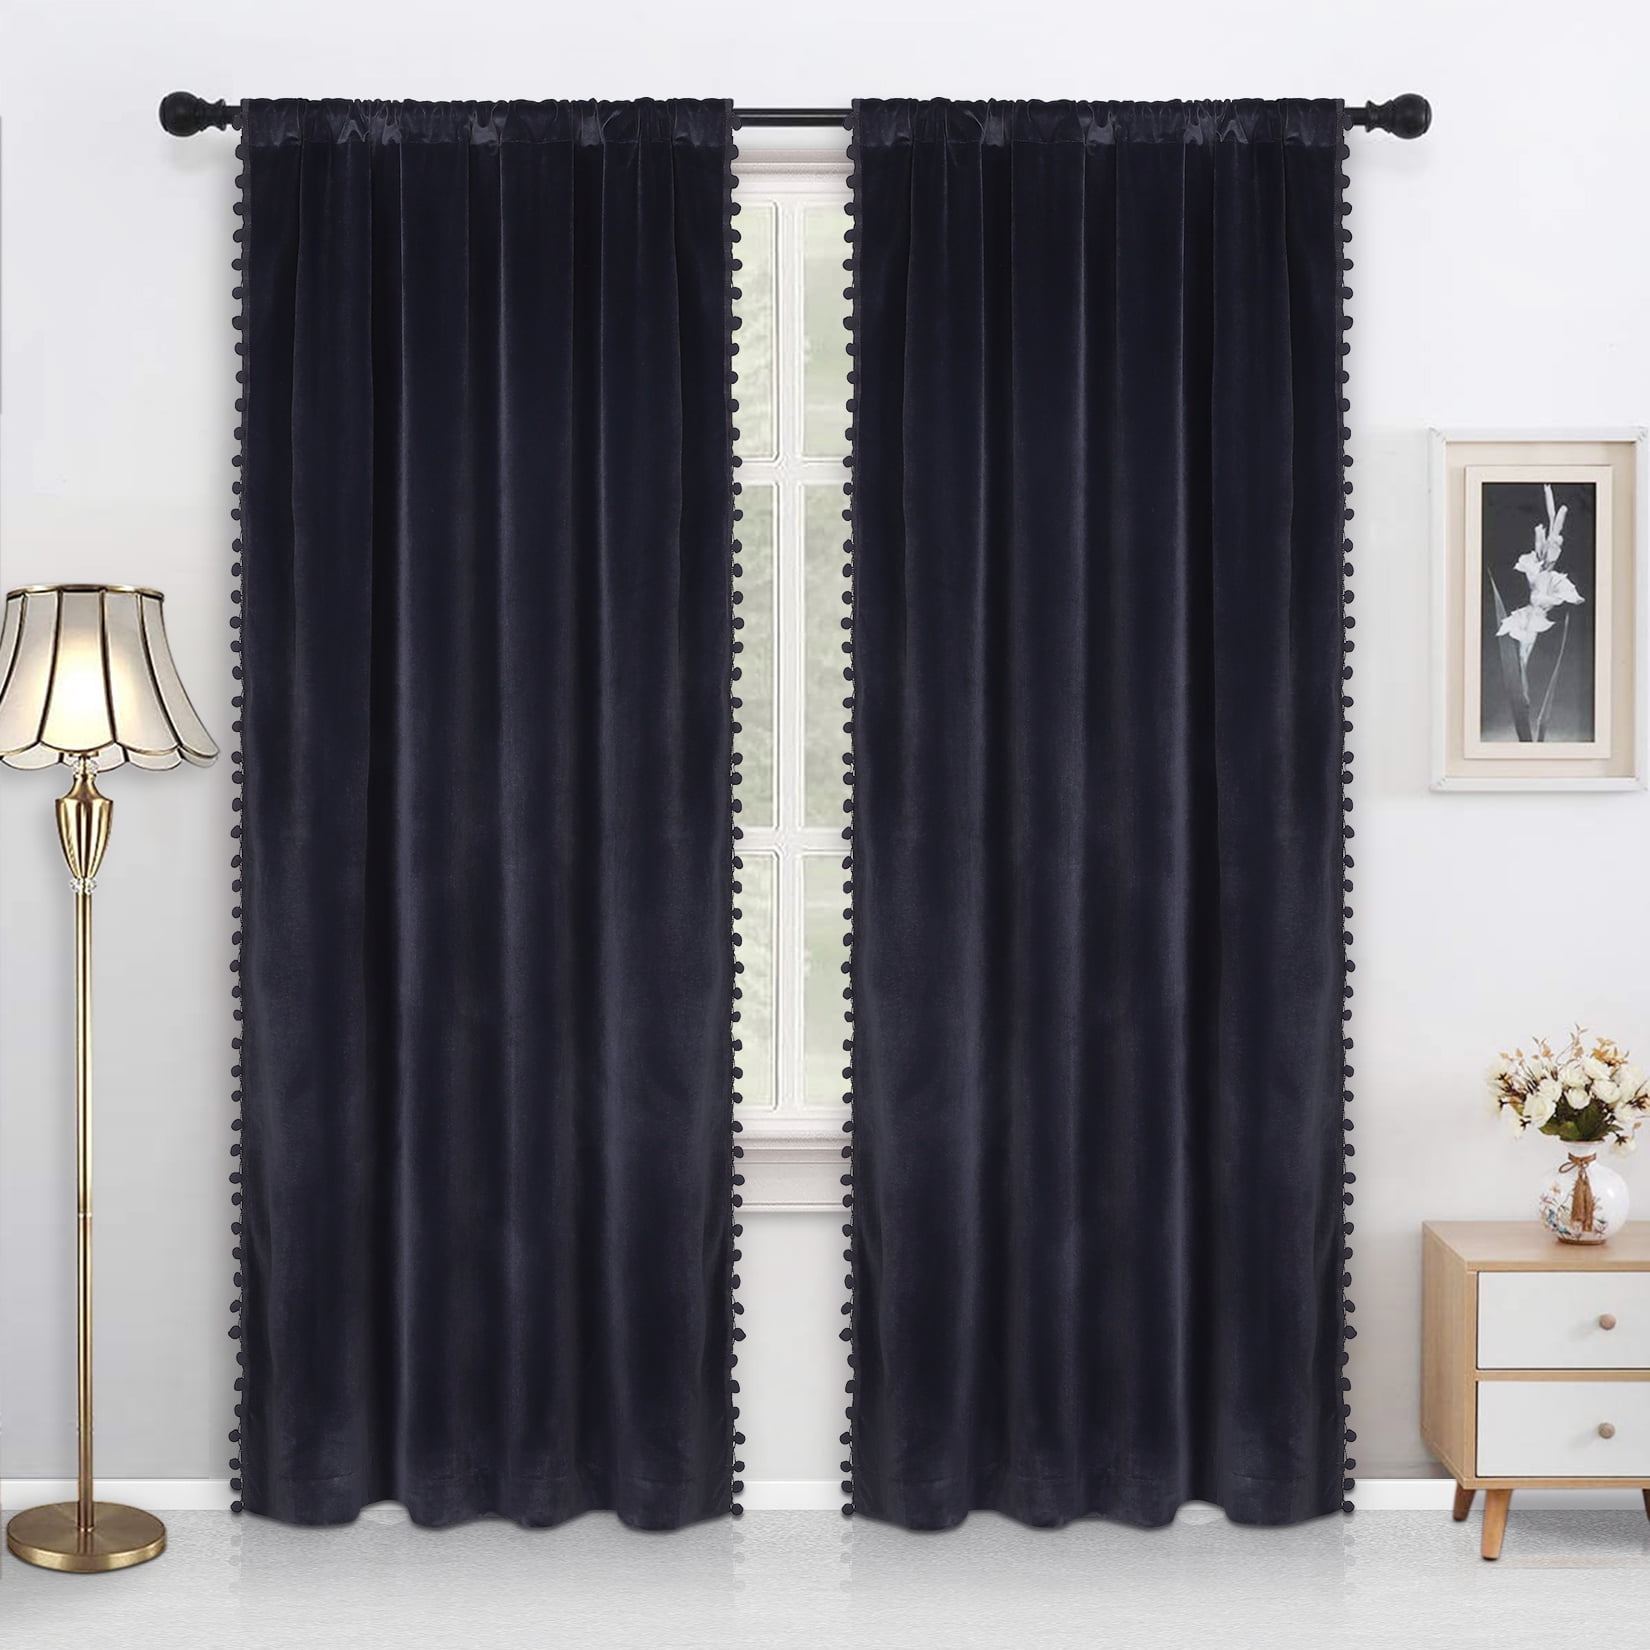 Plush Velvet Curtains Ready Made Fully Lined Eyelet Ring Top Pair Panels Bedroom 